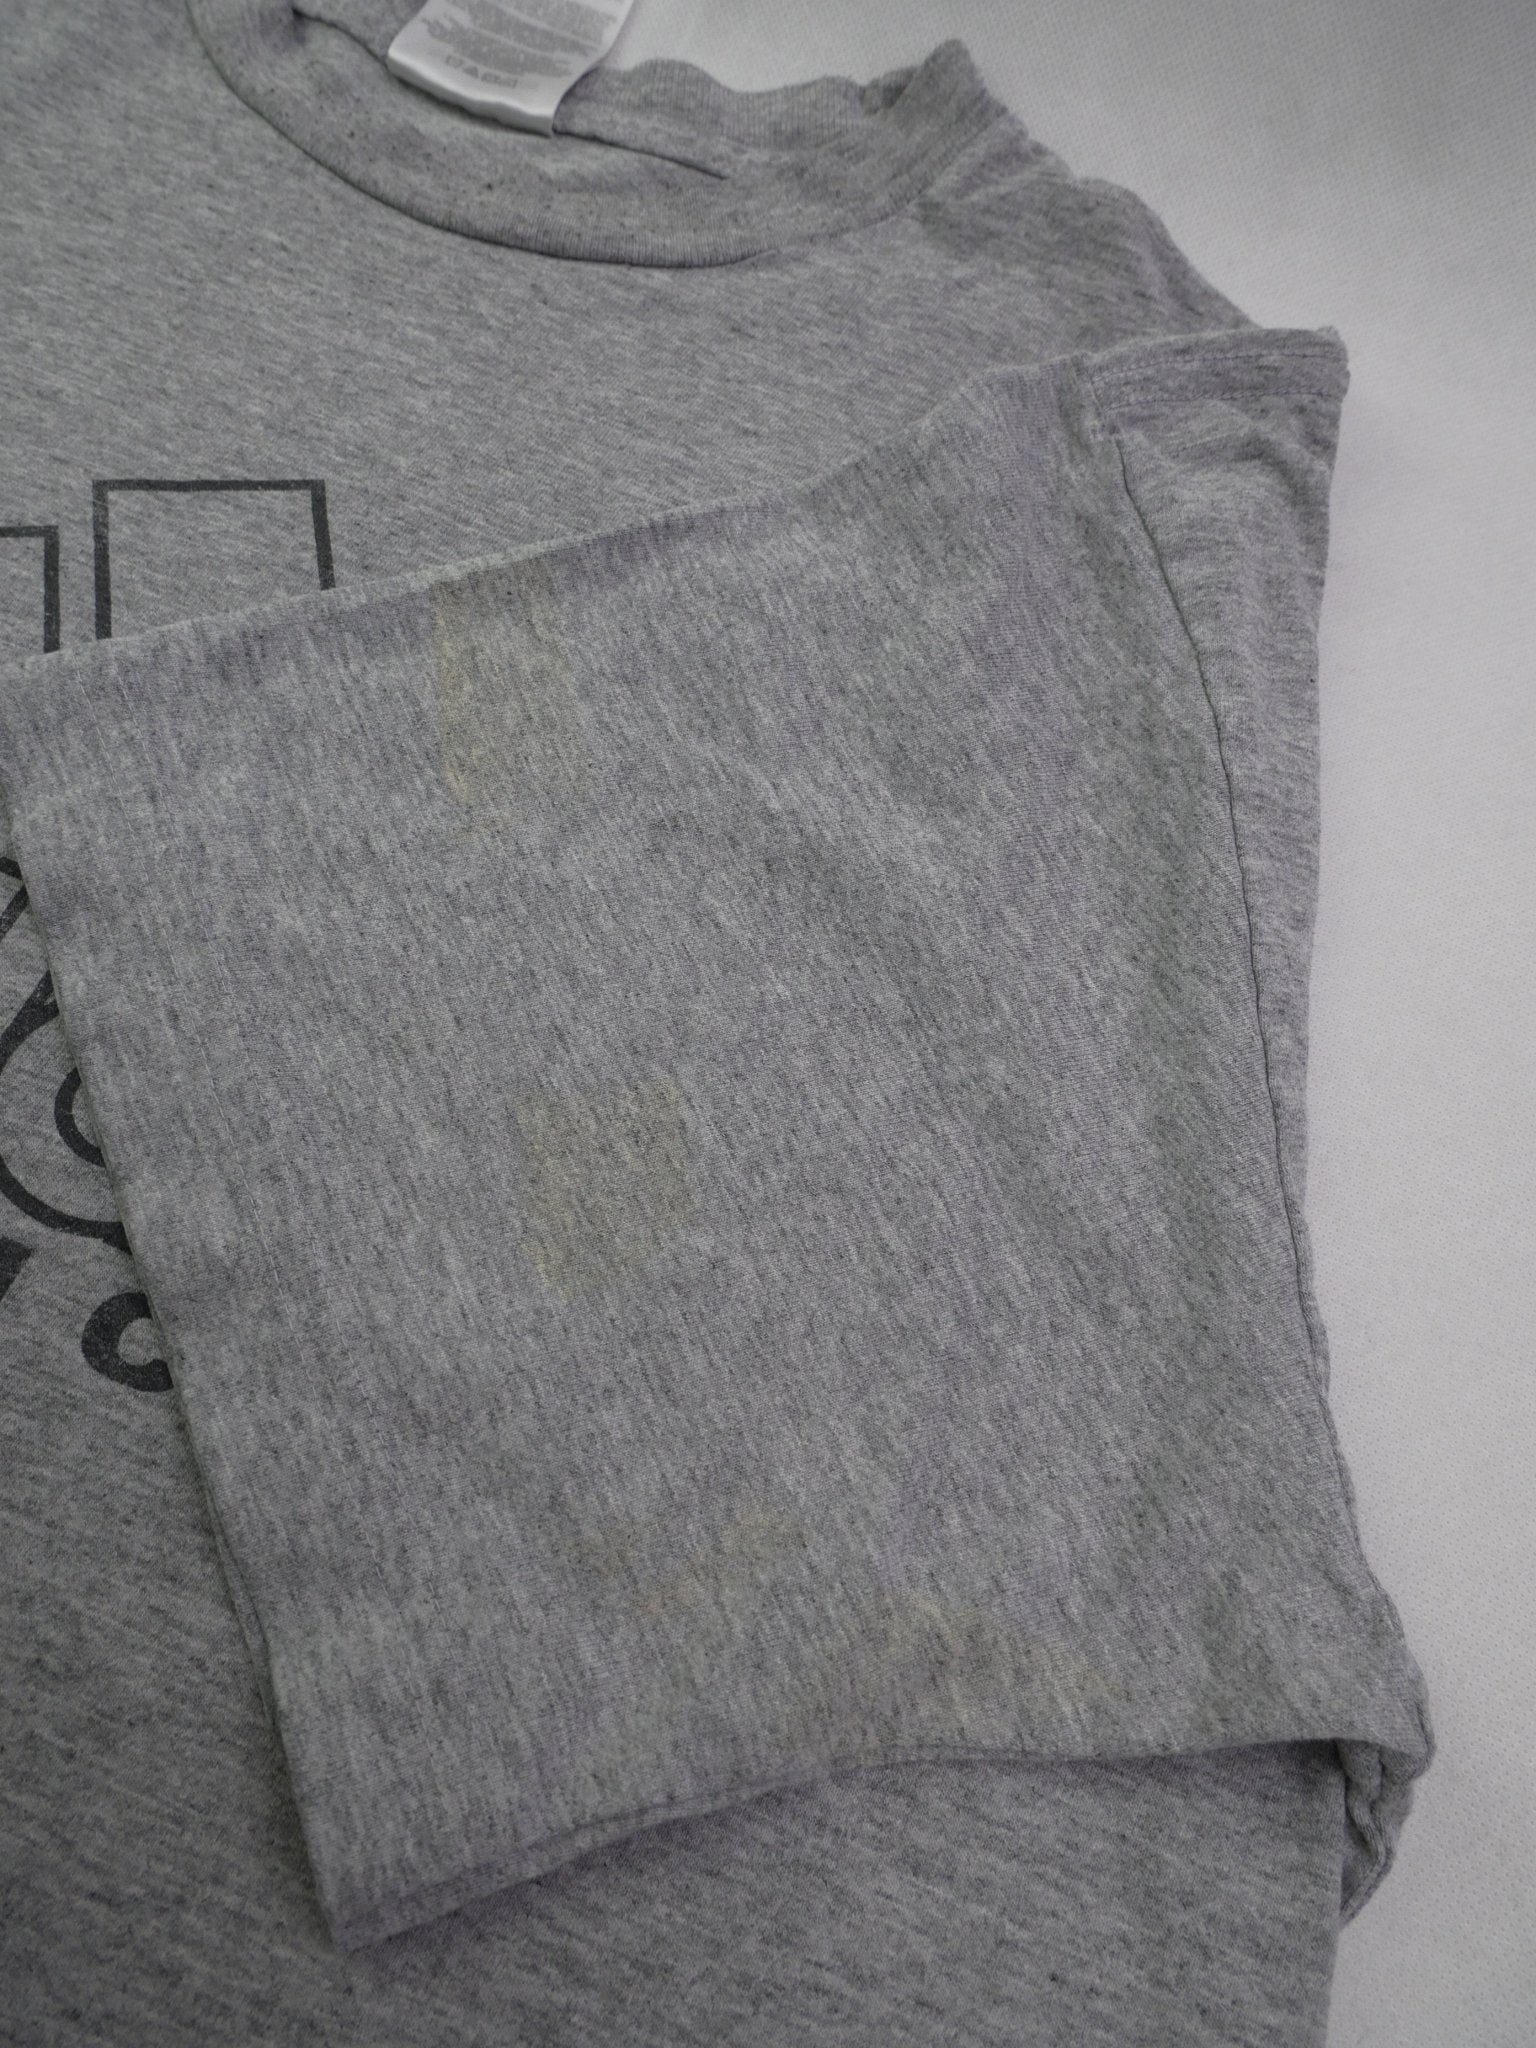 adidas Athletics printed Logo grey Shirt - Peeces